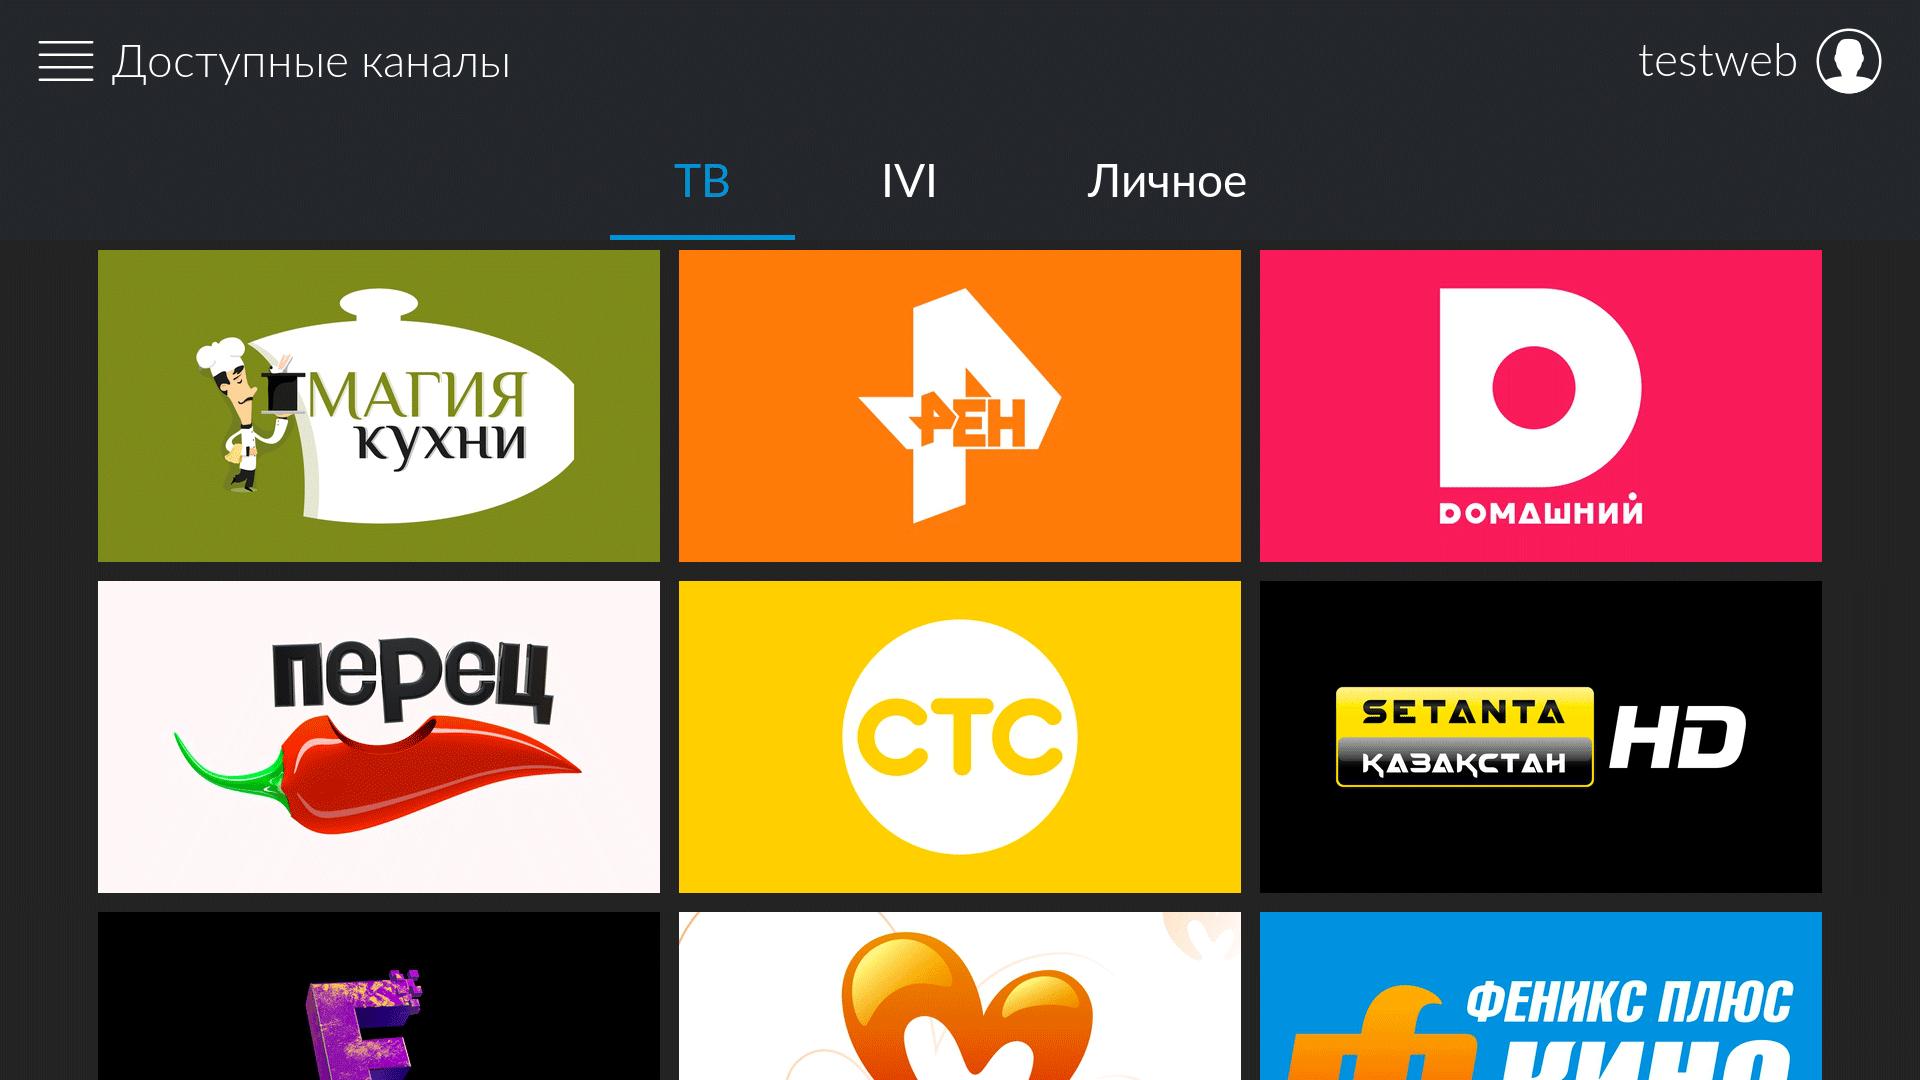 Samsung TV APK per Android Download